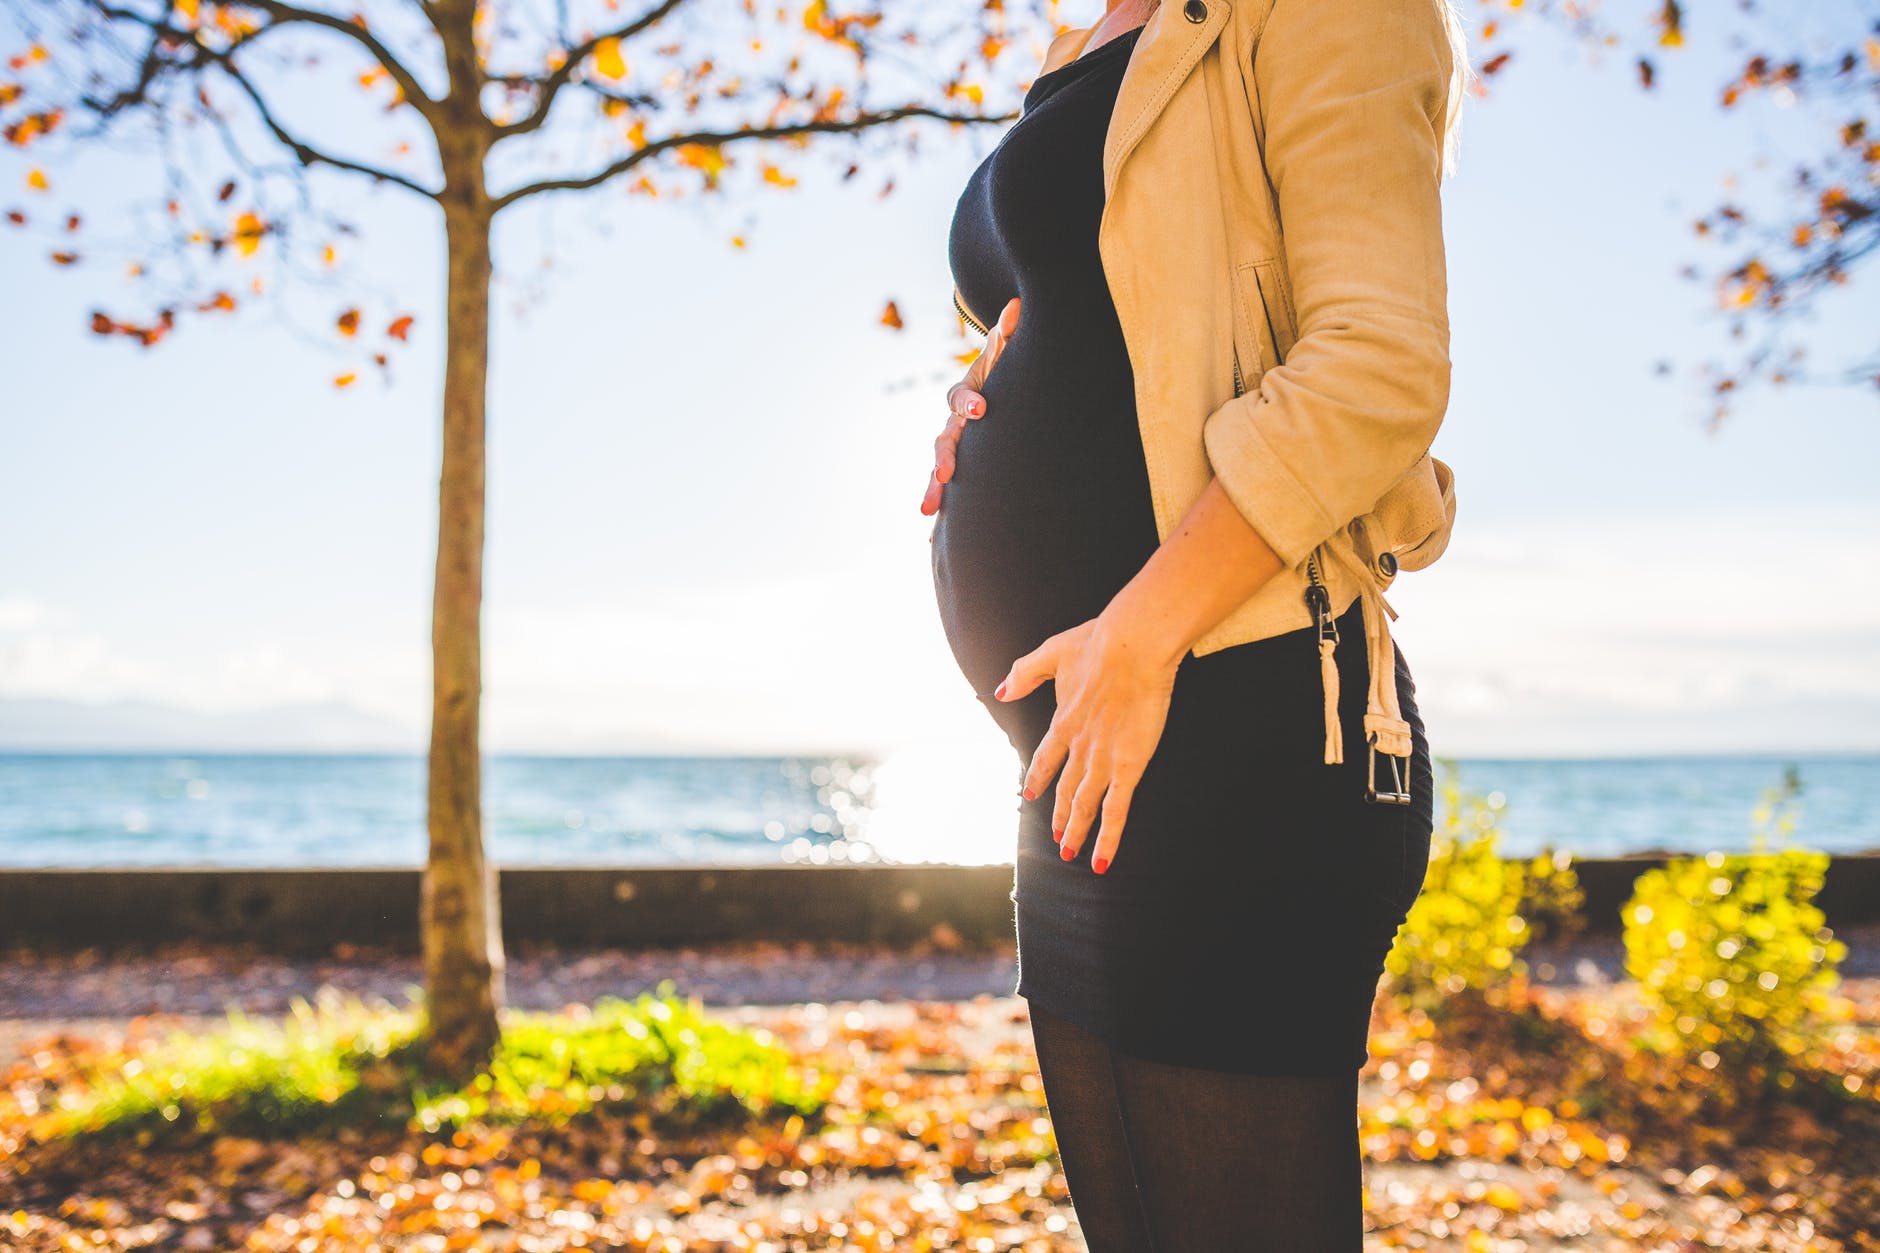 Cruralgia e gravidez: como controlar as convulsões? (Exercícios)